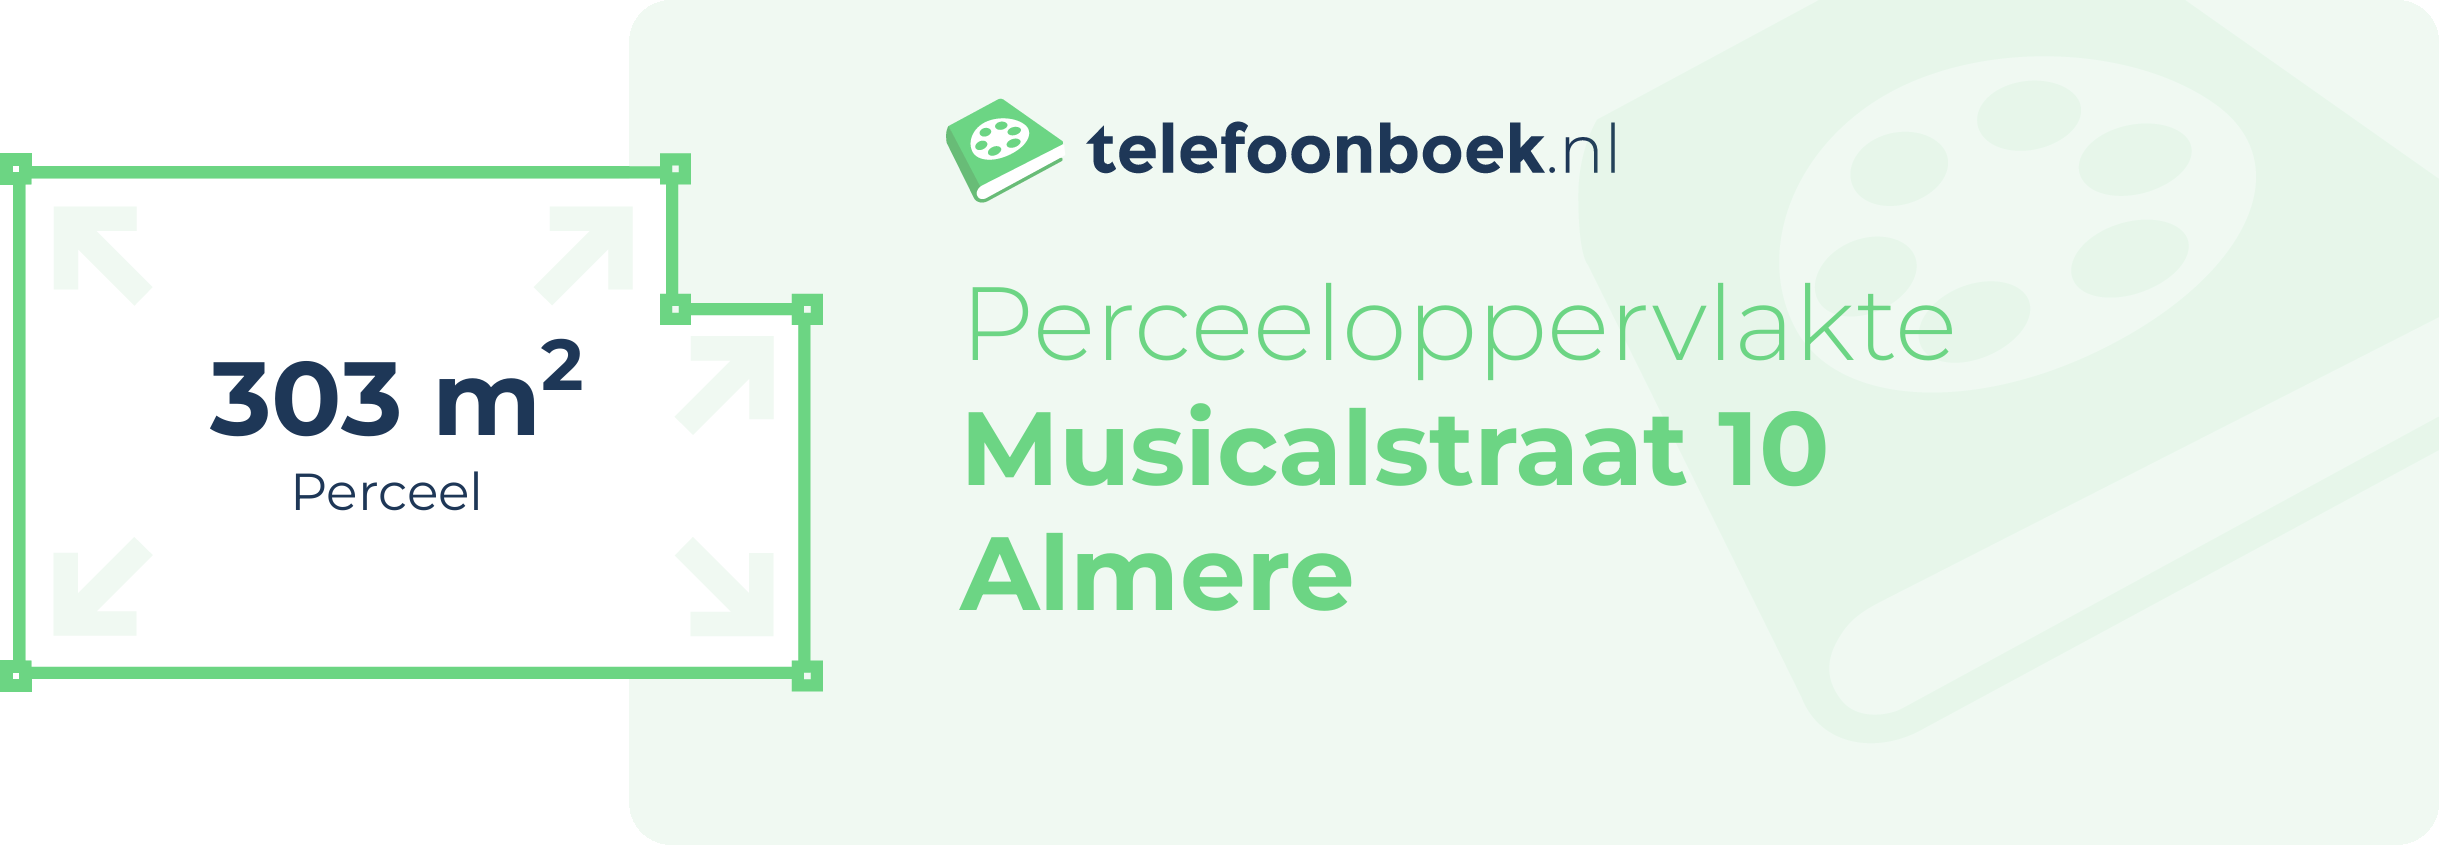 Perceeloppervlakte Musicalstraat 10 Almere